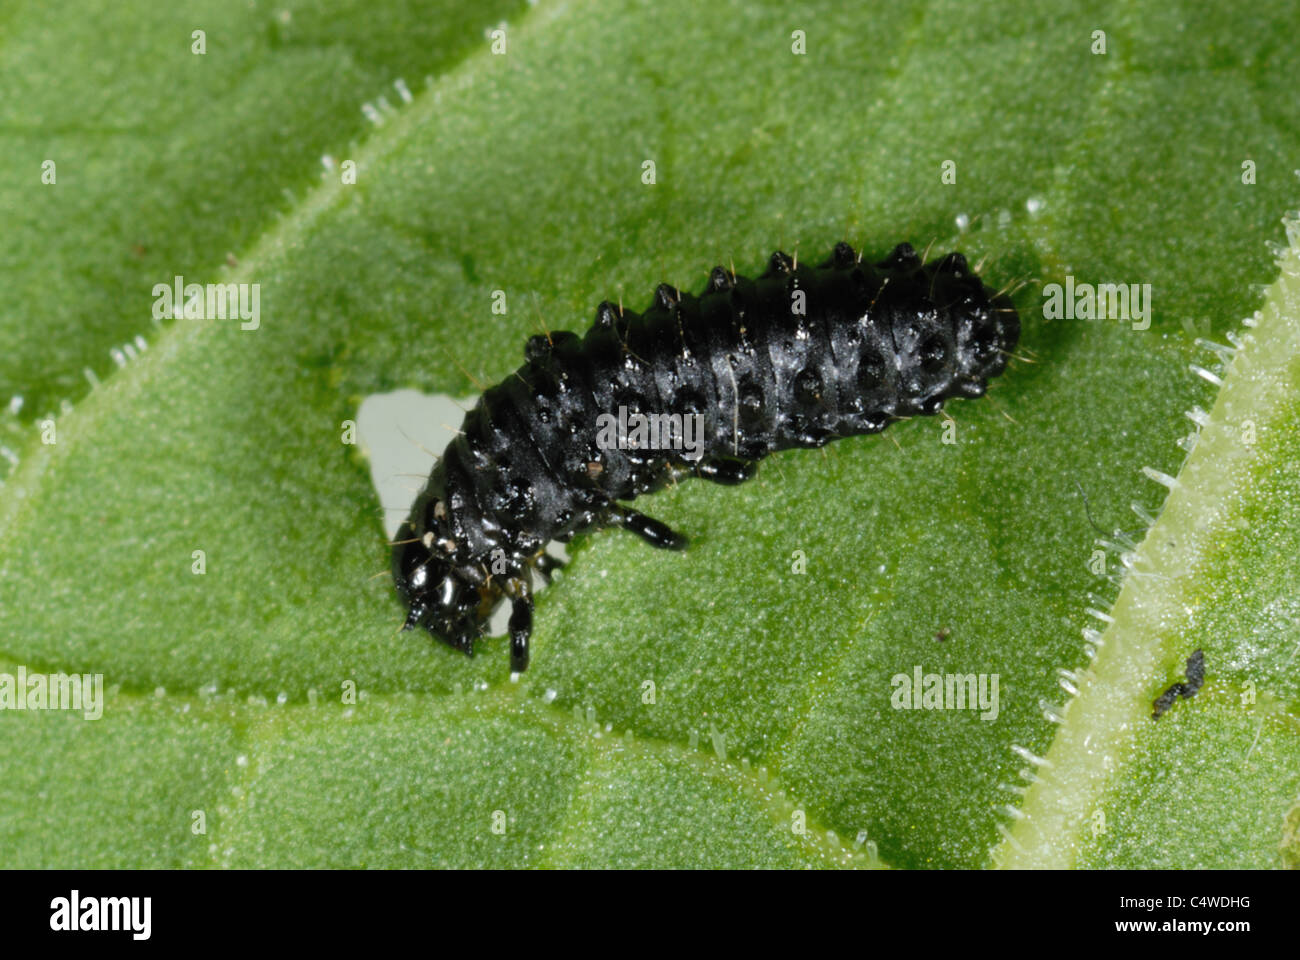 Green dock beetle larvae (Gastrophysa viridula) feeding on broad dock leaf Stock Photo